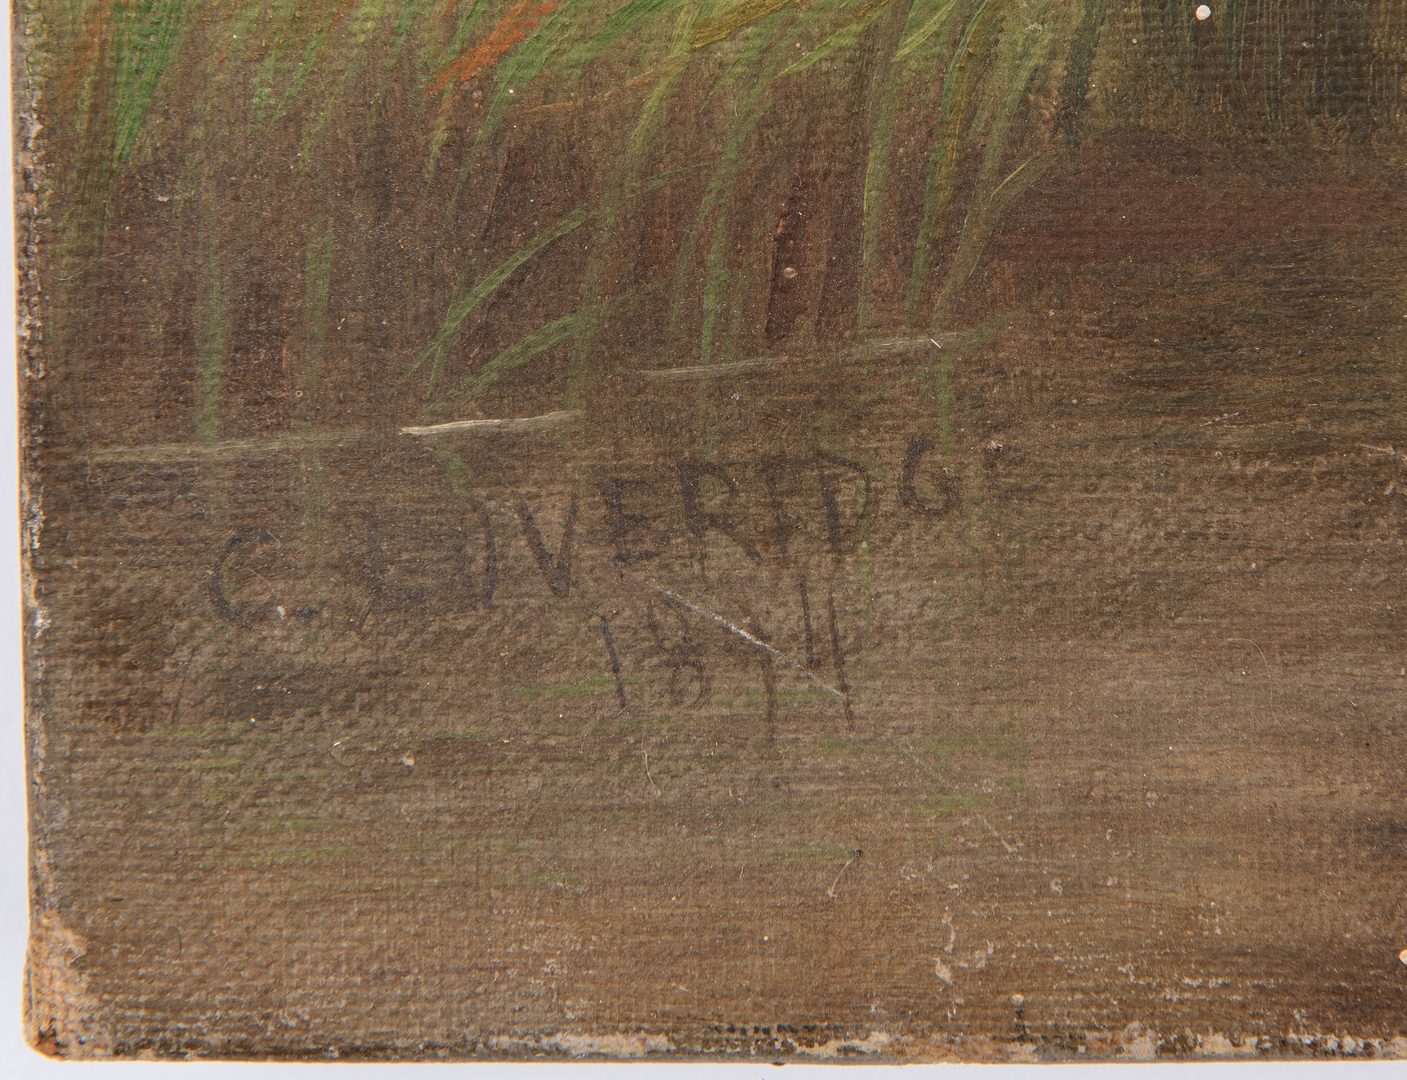 Lot 413: Clinton Loveridge O/C, Landscape with Cows